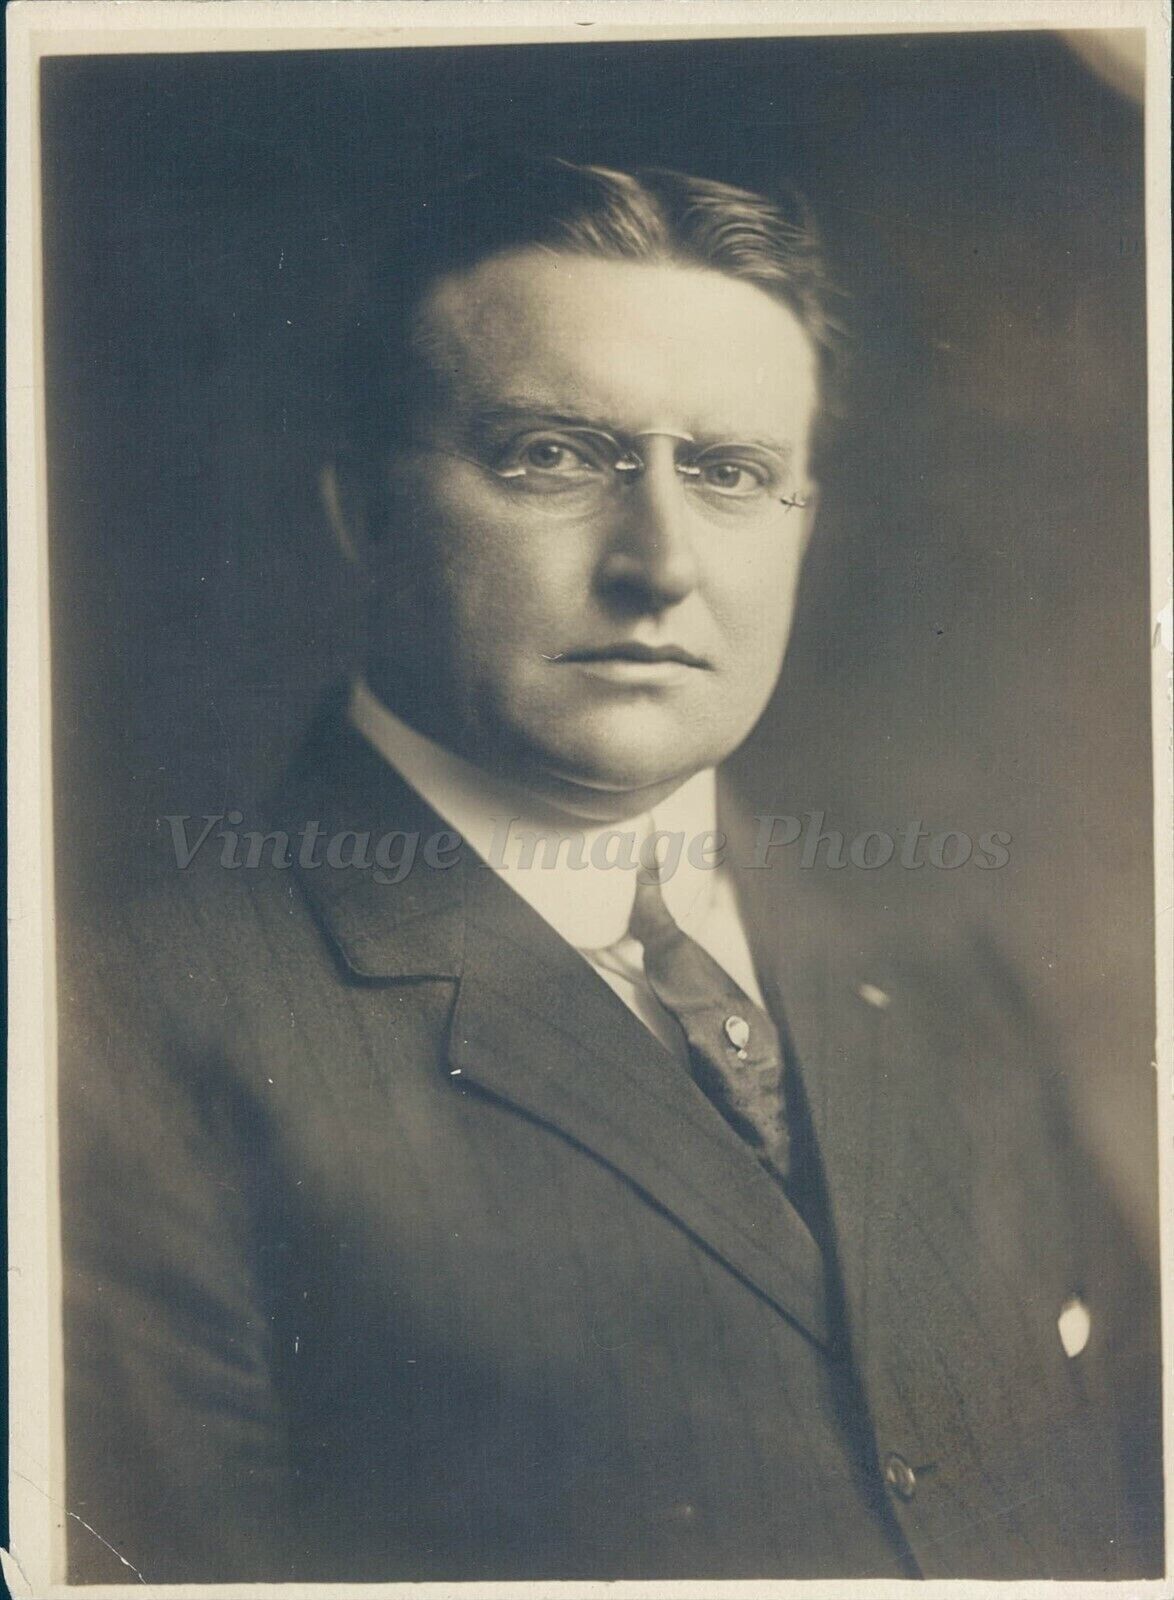 1918 Leon Fisher Vice President Equitable Business Man Image Vintage Press Photo